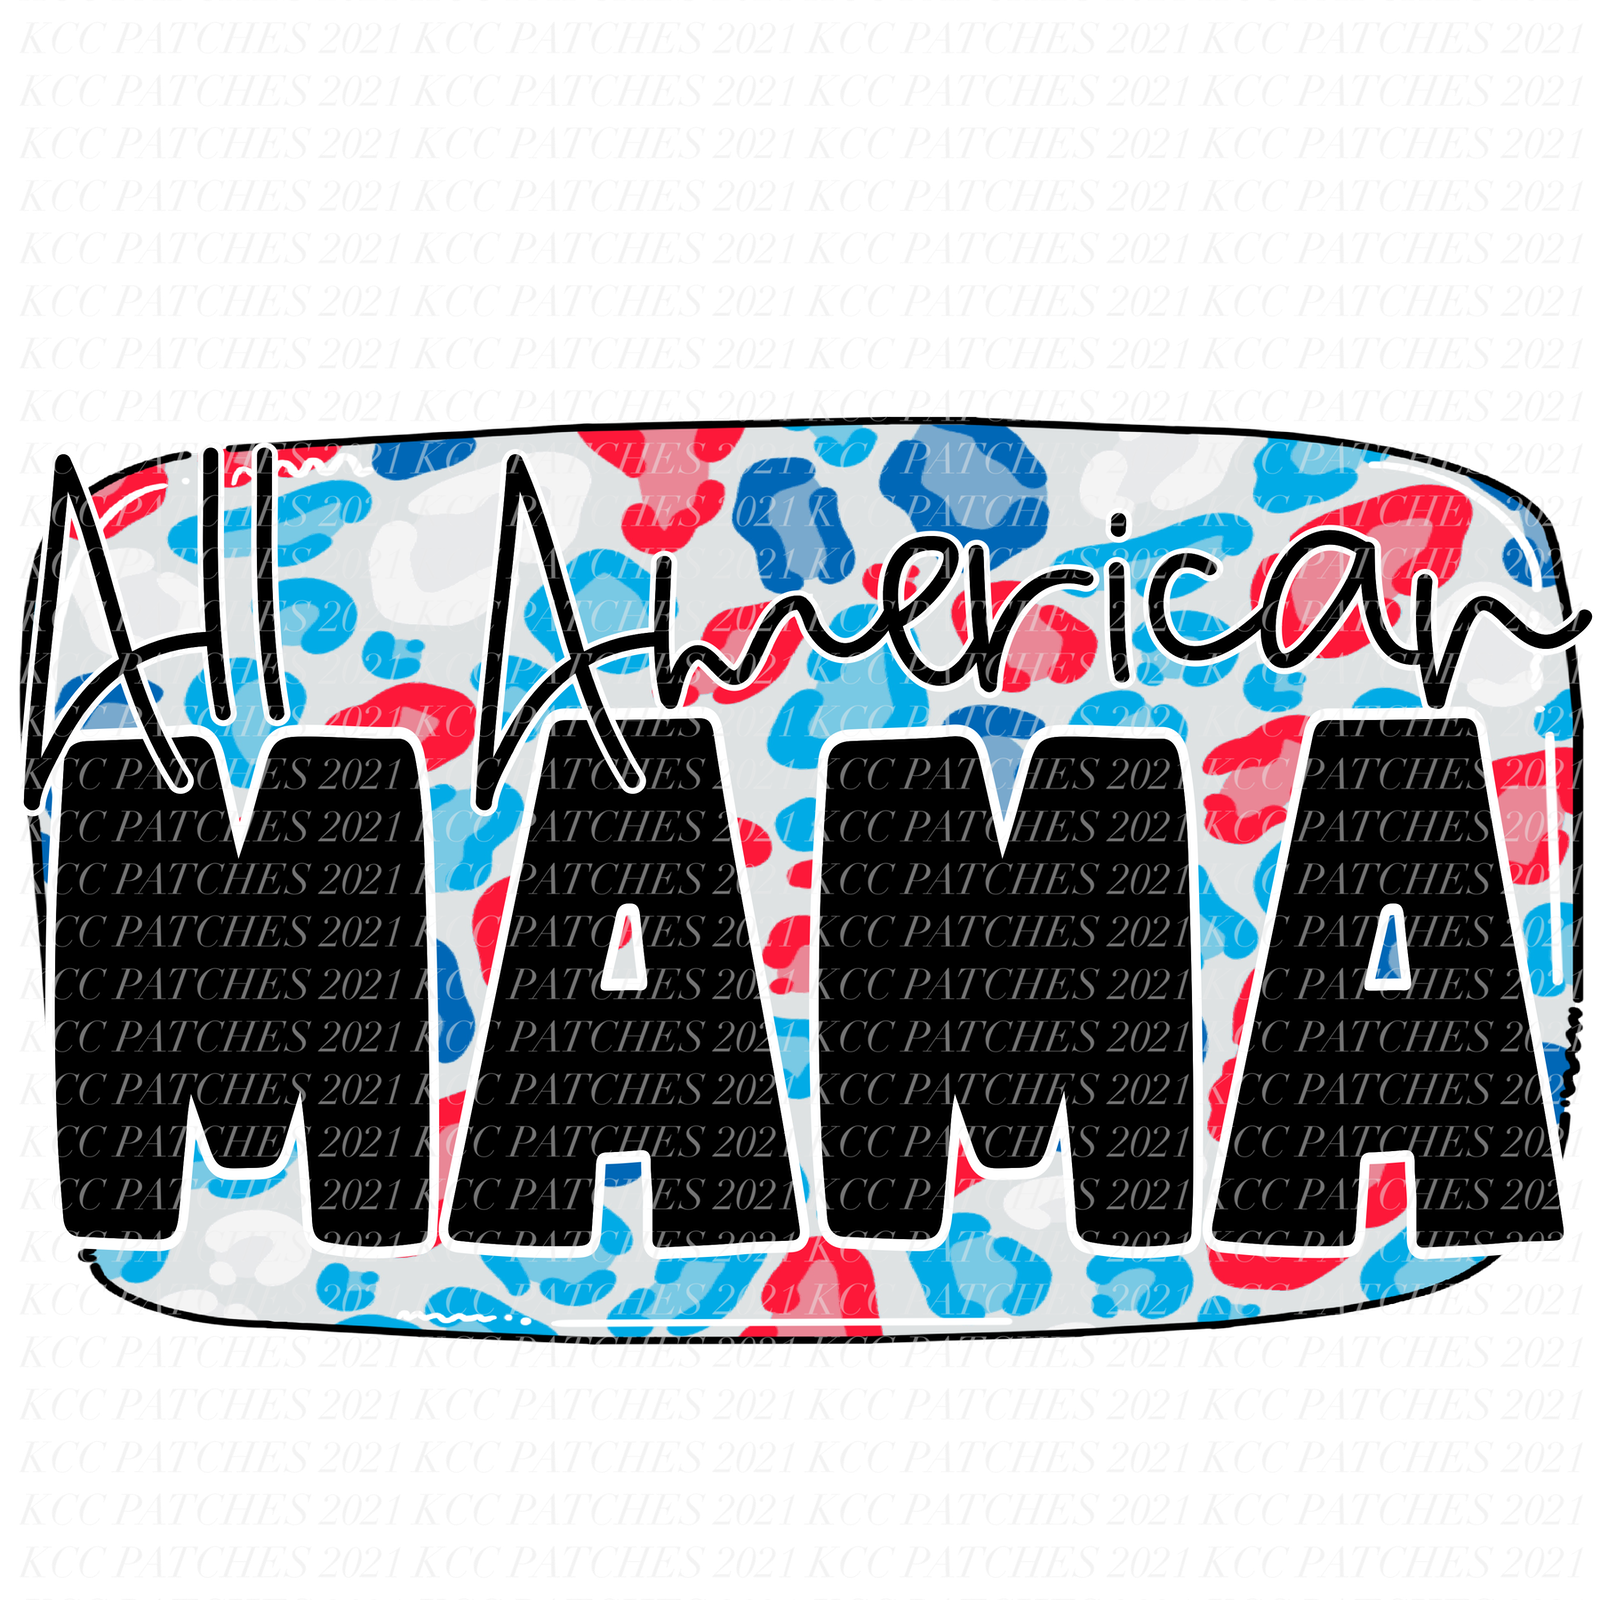 All American Mama/Babe